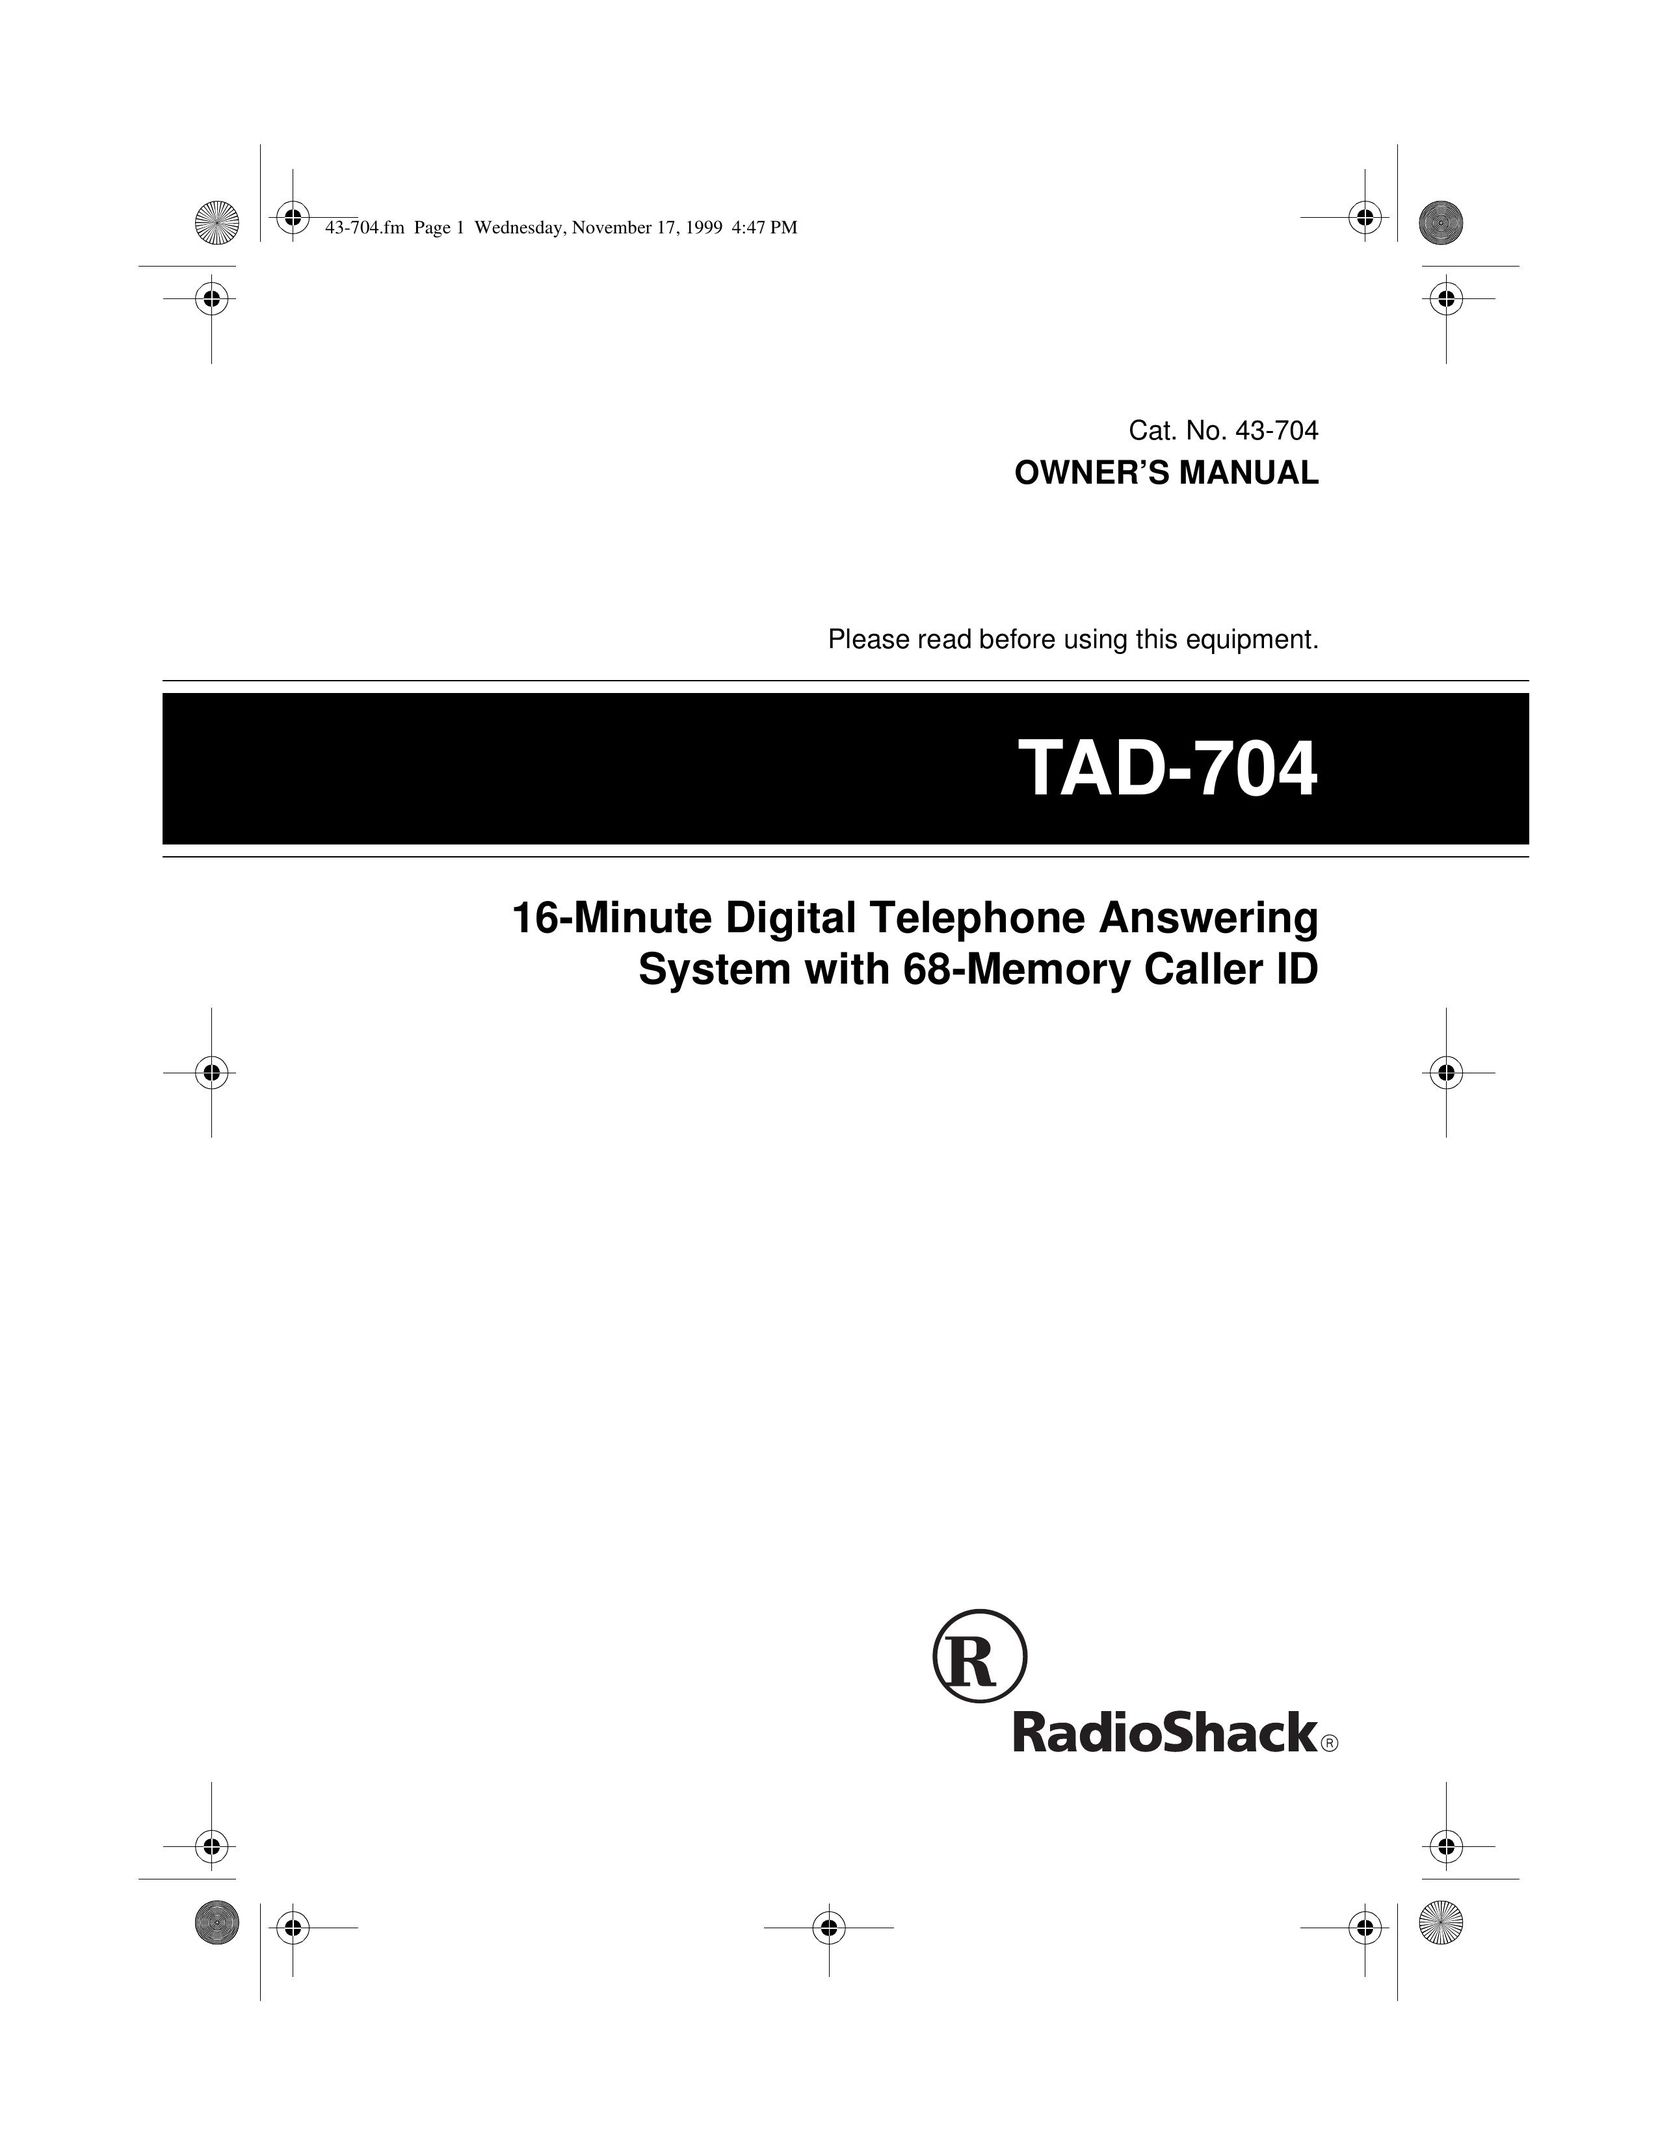 Radio Shack TAD-704 Answering Machine User Manual